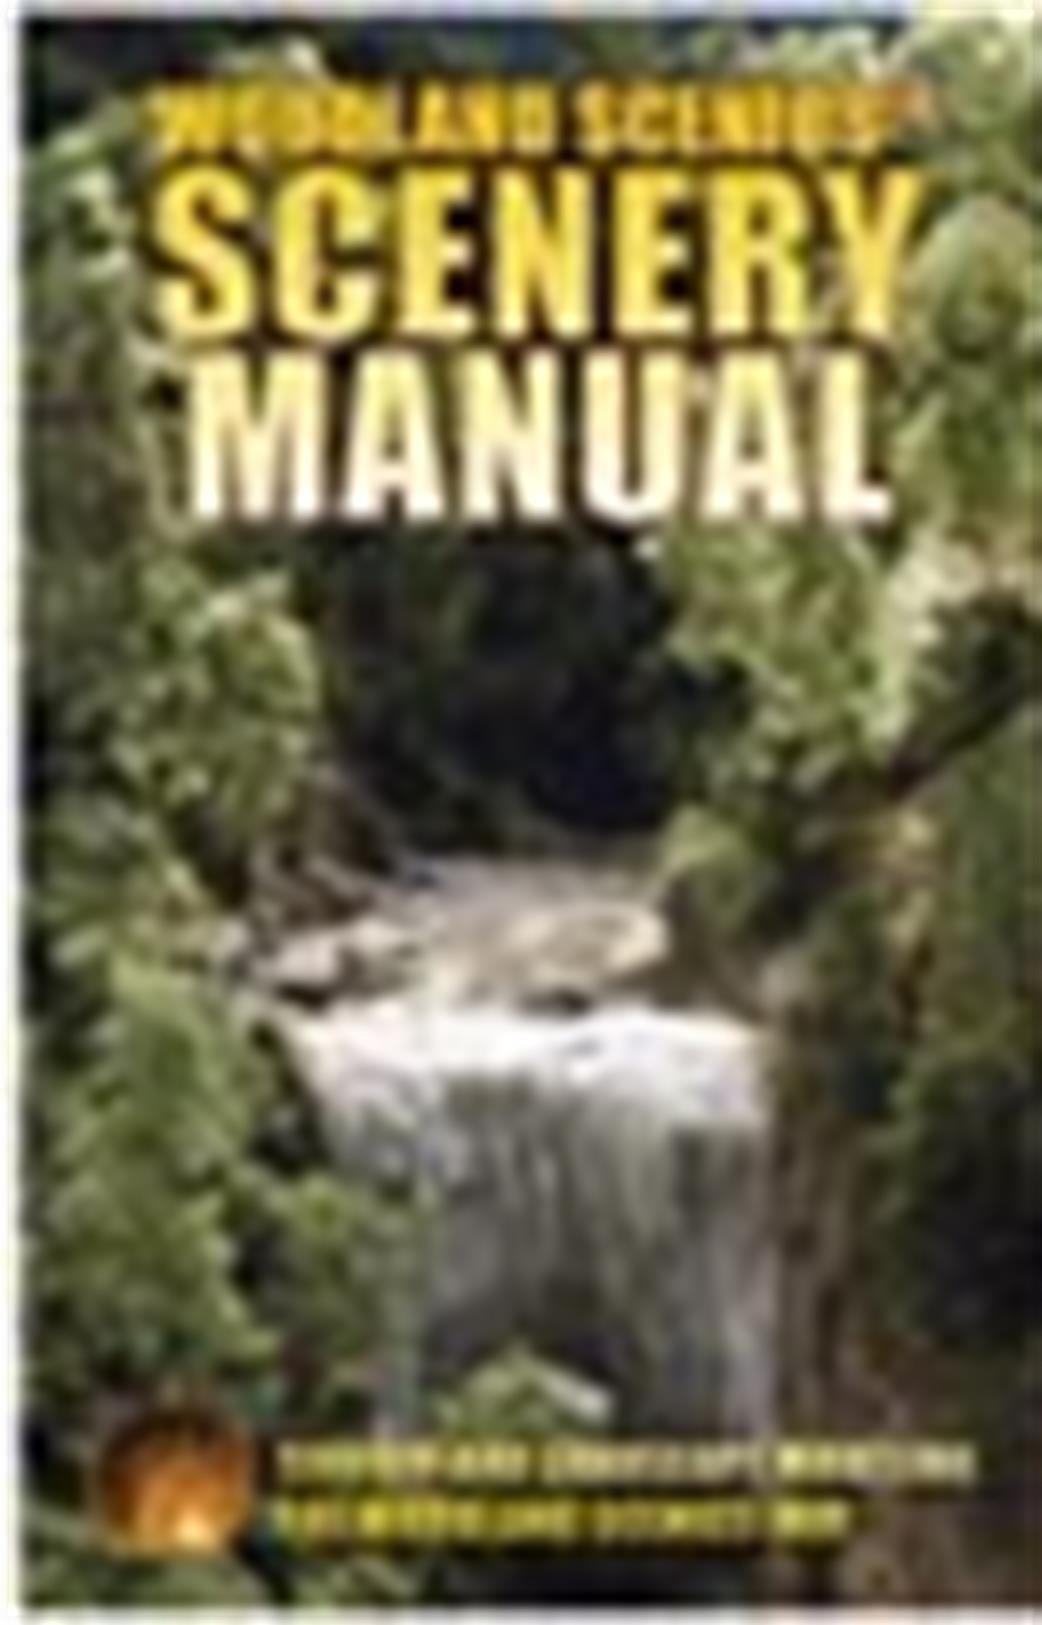 Woodland Scenics C1207 Scenery Manual